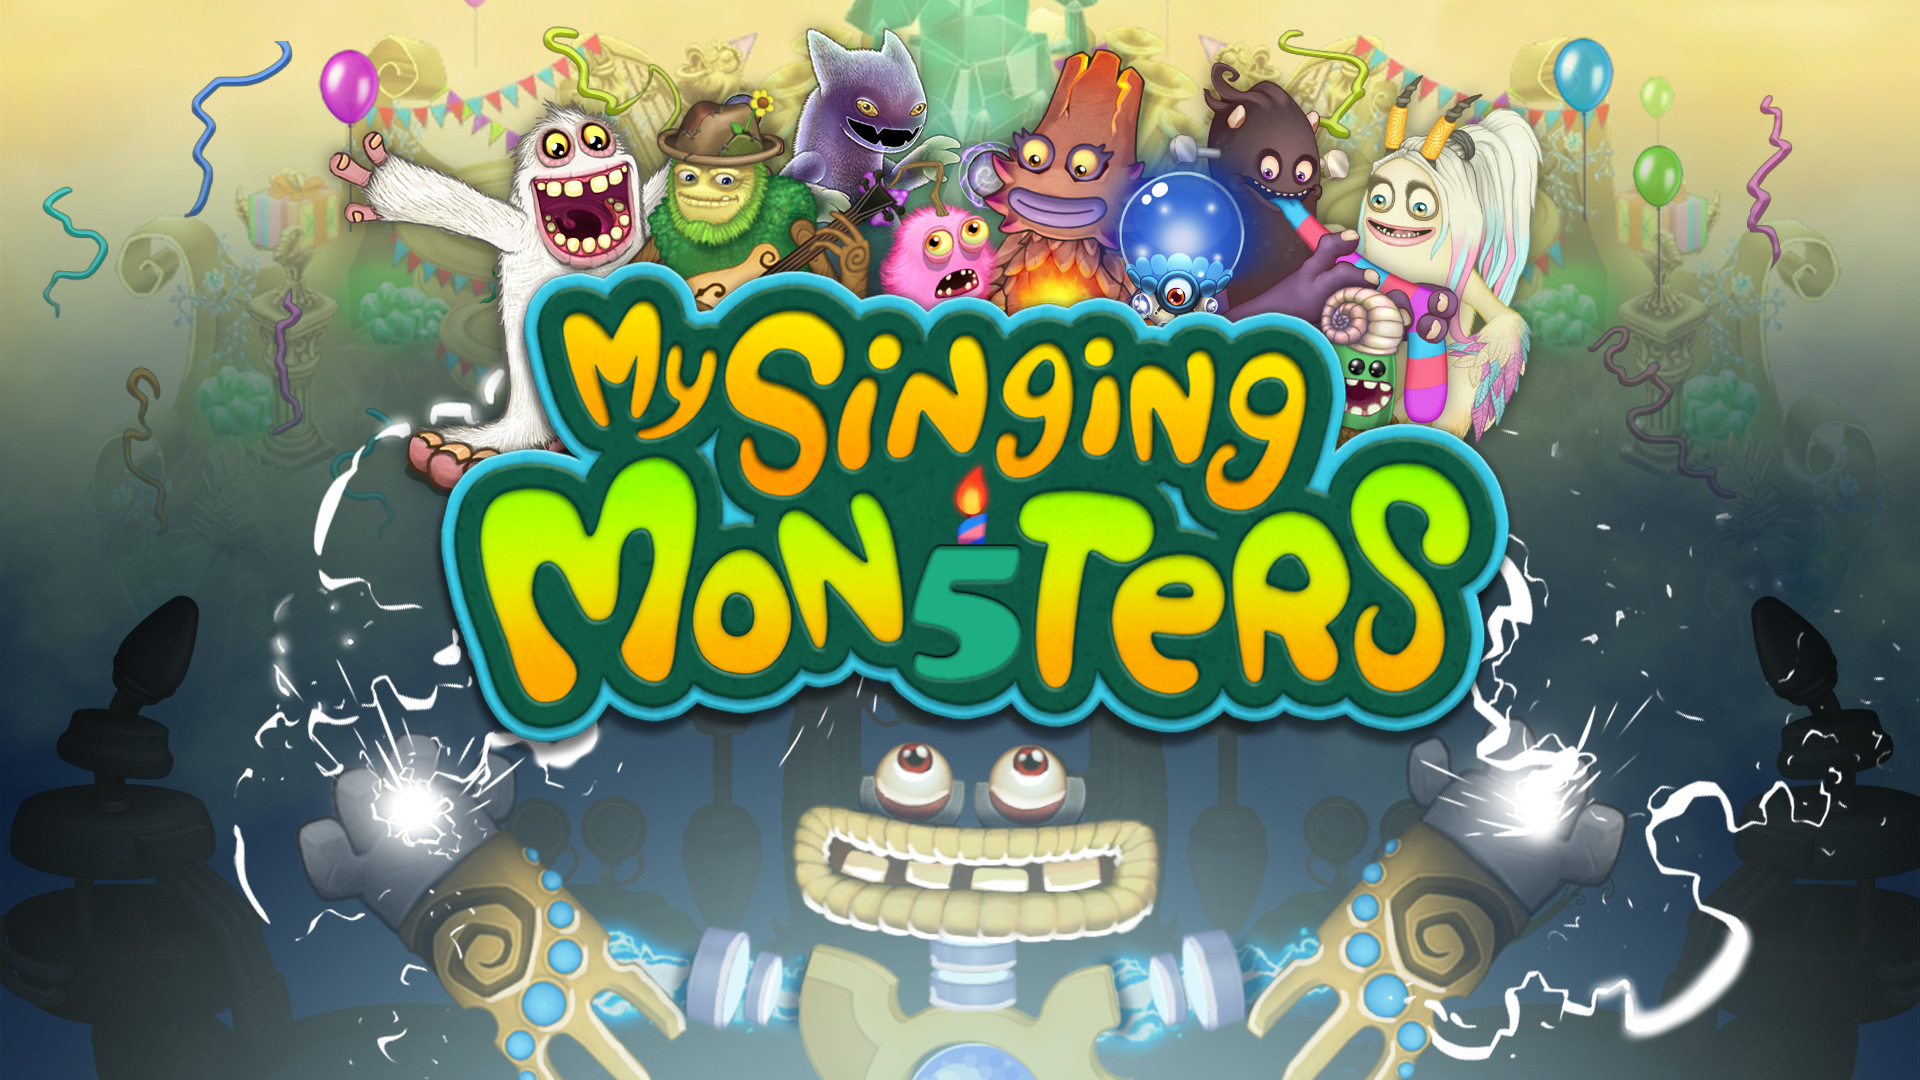 My sing download. Май сингинг Монстер. Коробас my singing Monsters. My singing Monsters монстры. Игра Мои Поющие монстры.